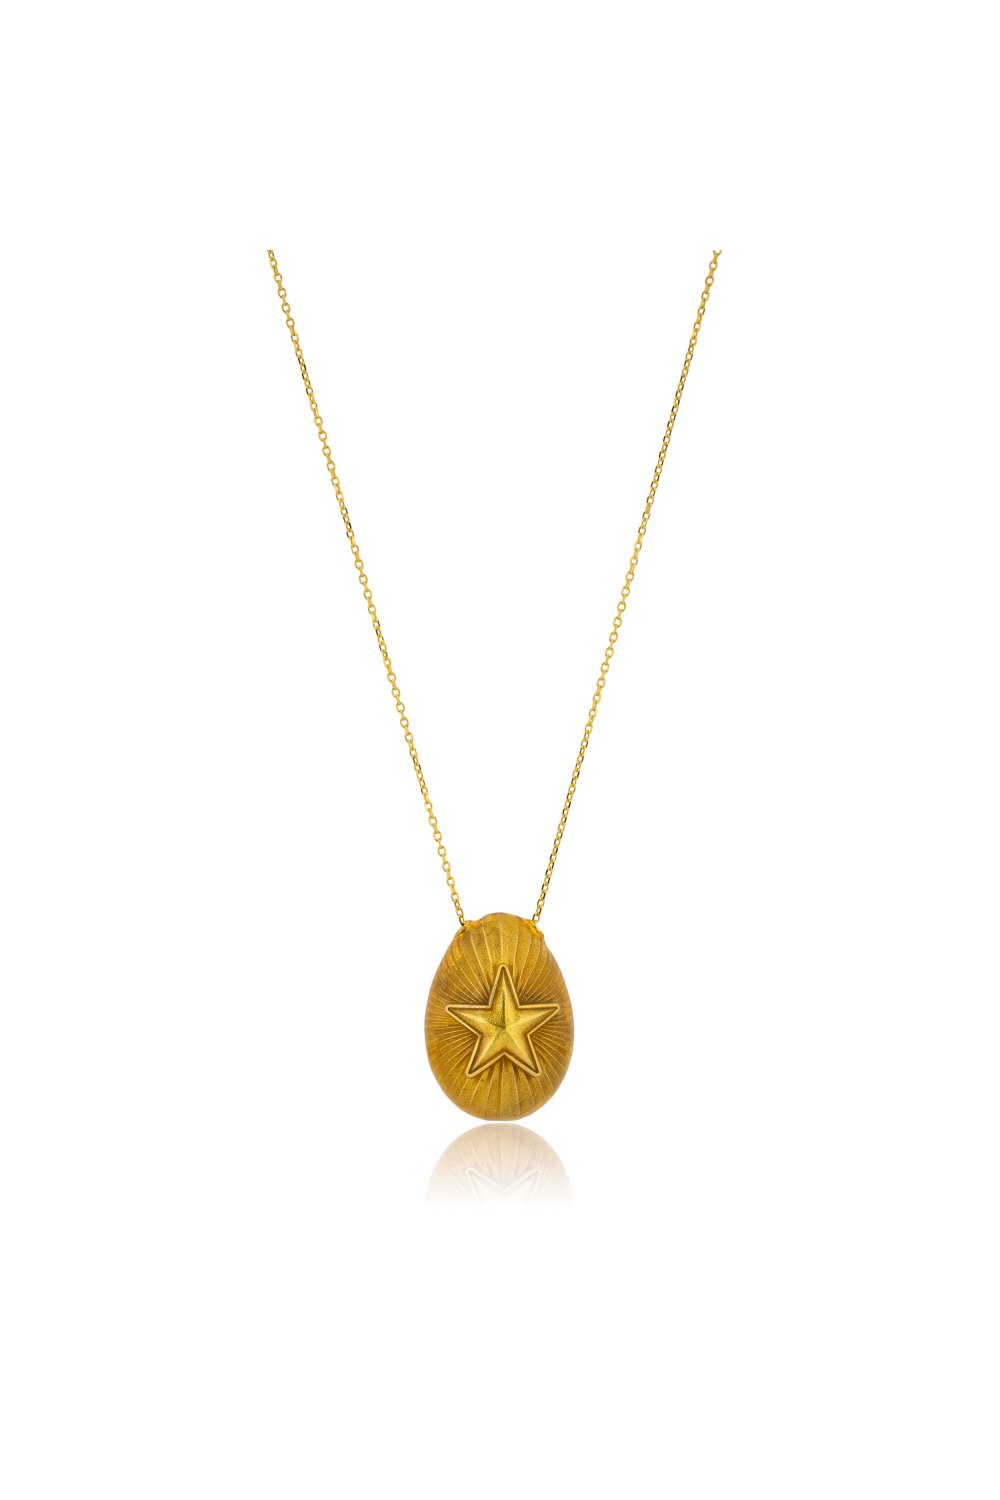 KESSARIS - Starry Easter Egg Pendant Necklace